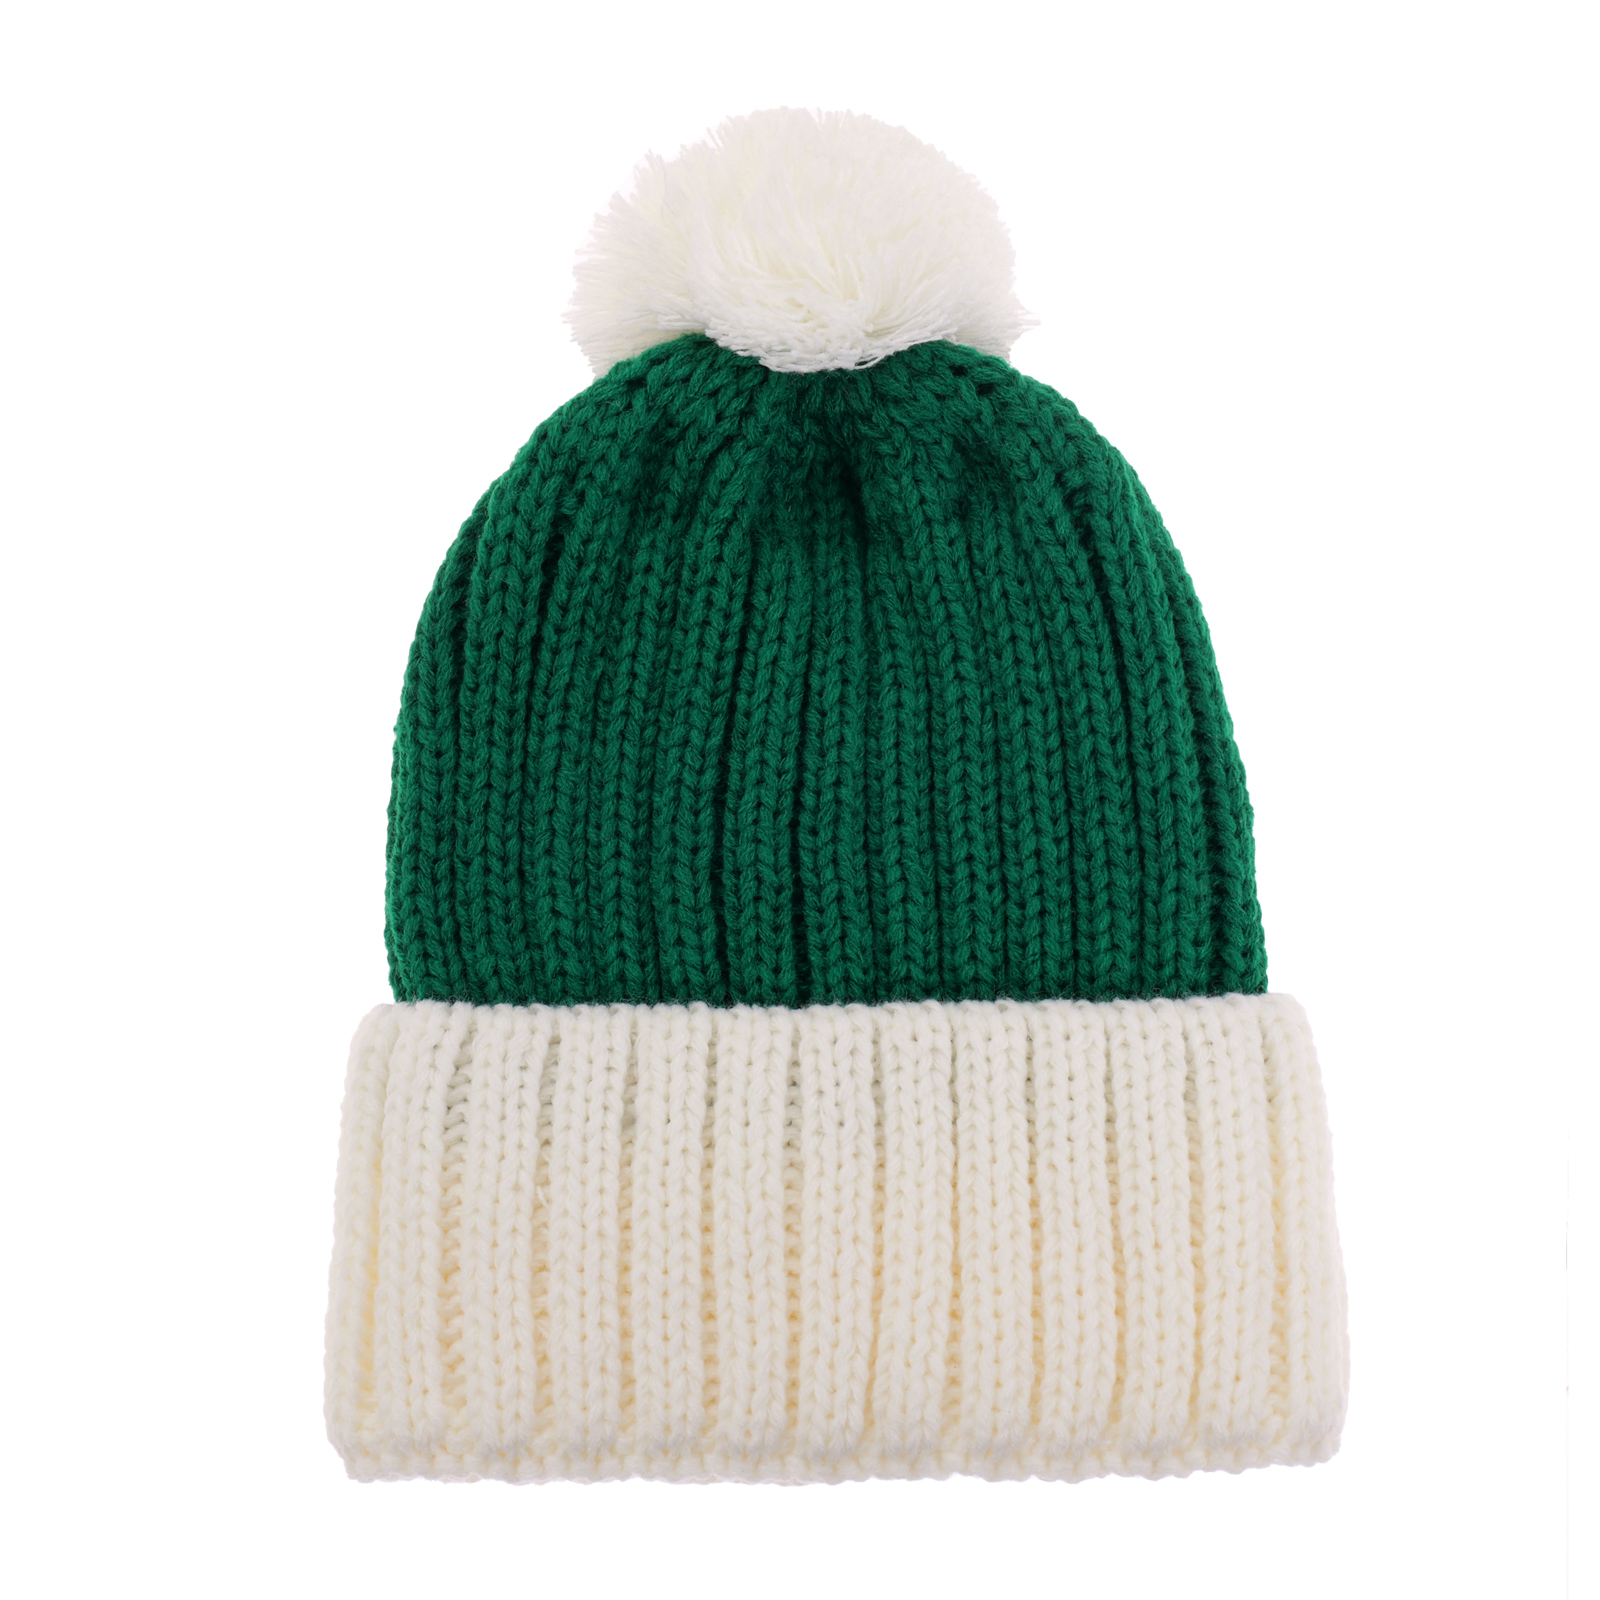 Coarse knit green/white